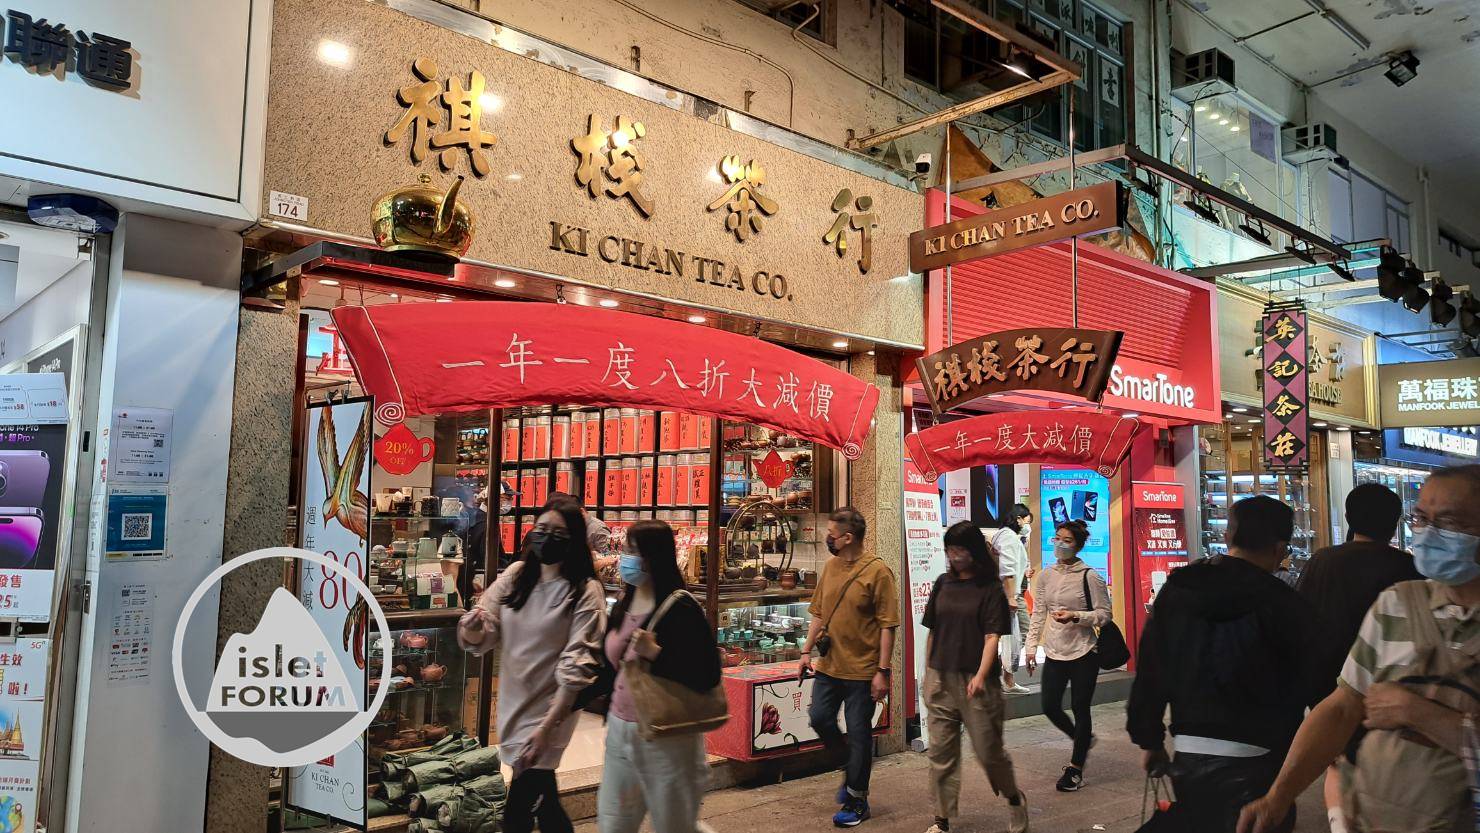 祺棧茶行Ki Chan Tea Co. 一年一度八折大減價。 Annual sales - 茶Tea